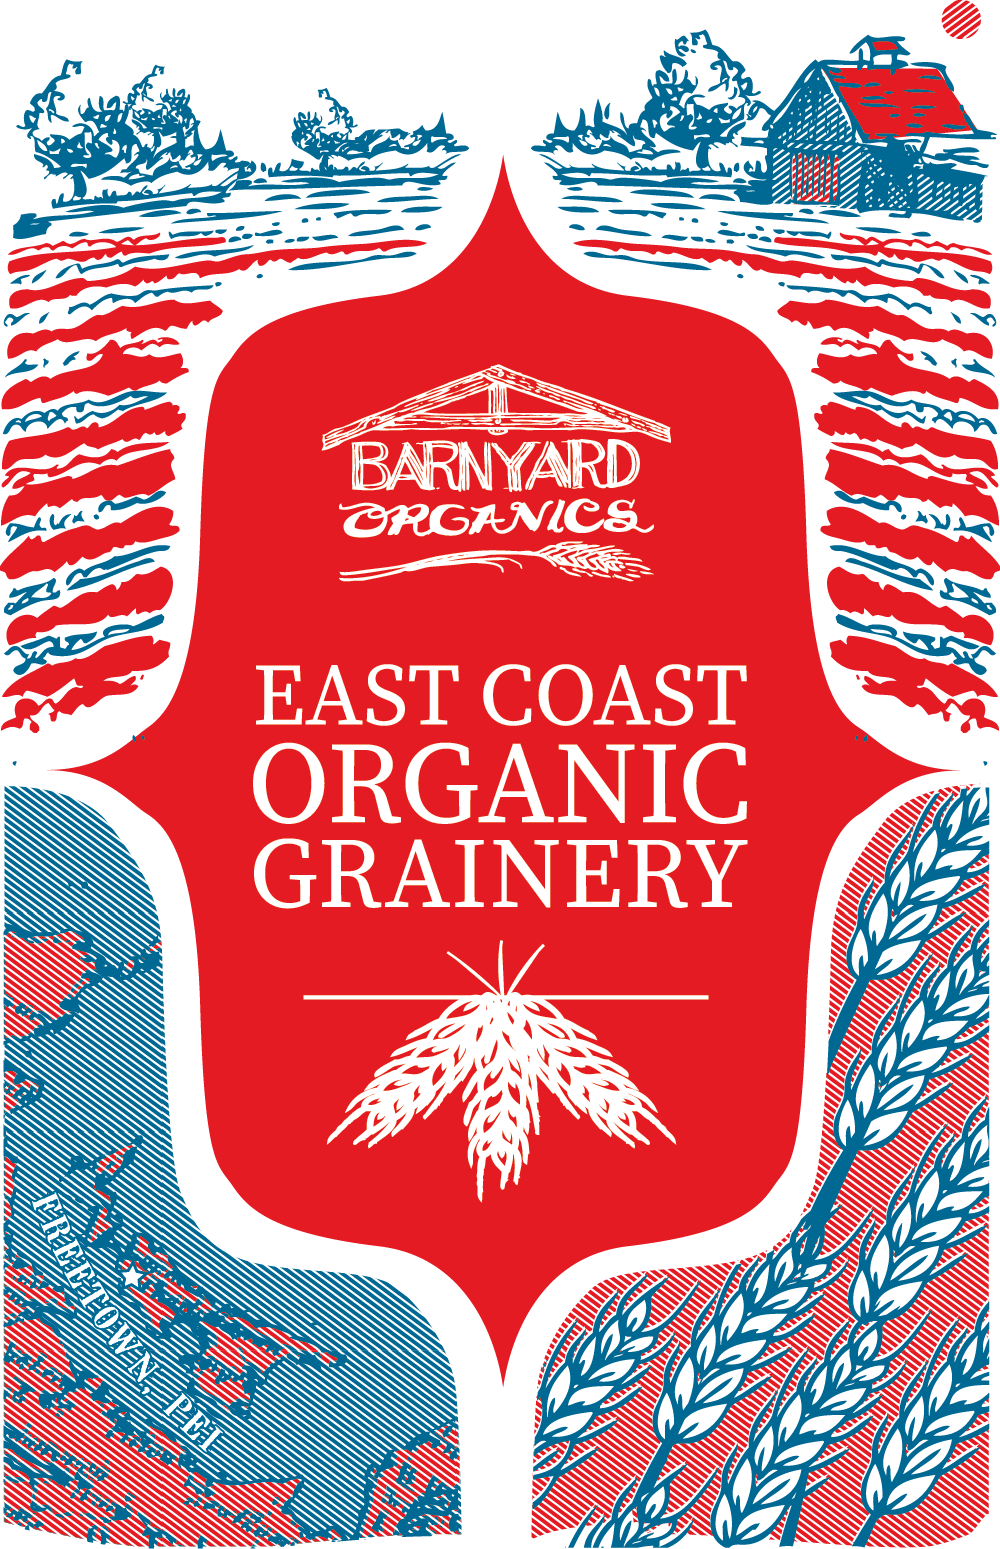 Home of East Coast Organic Grainery